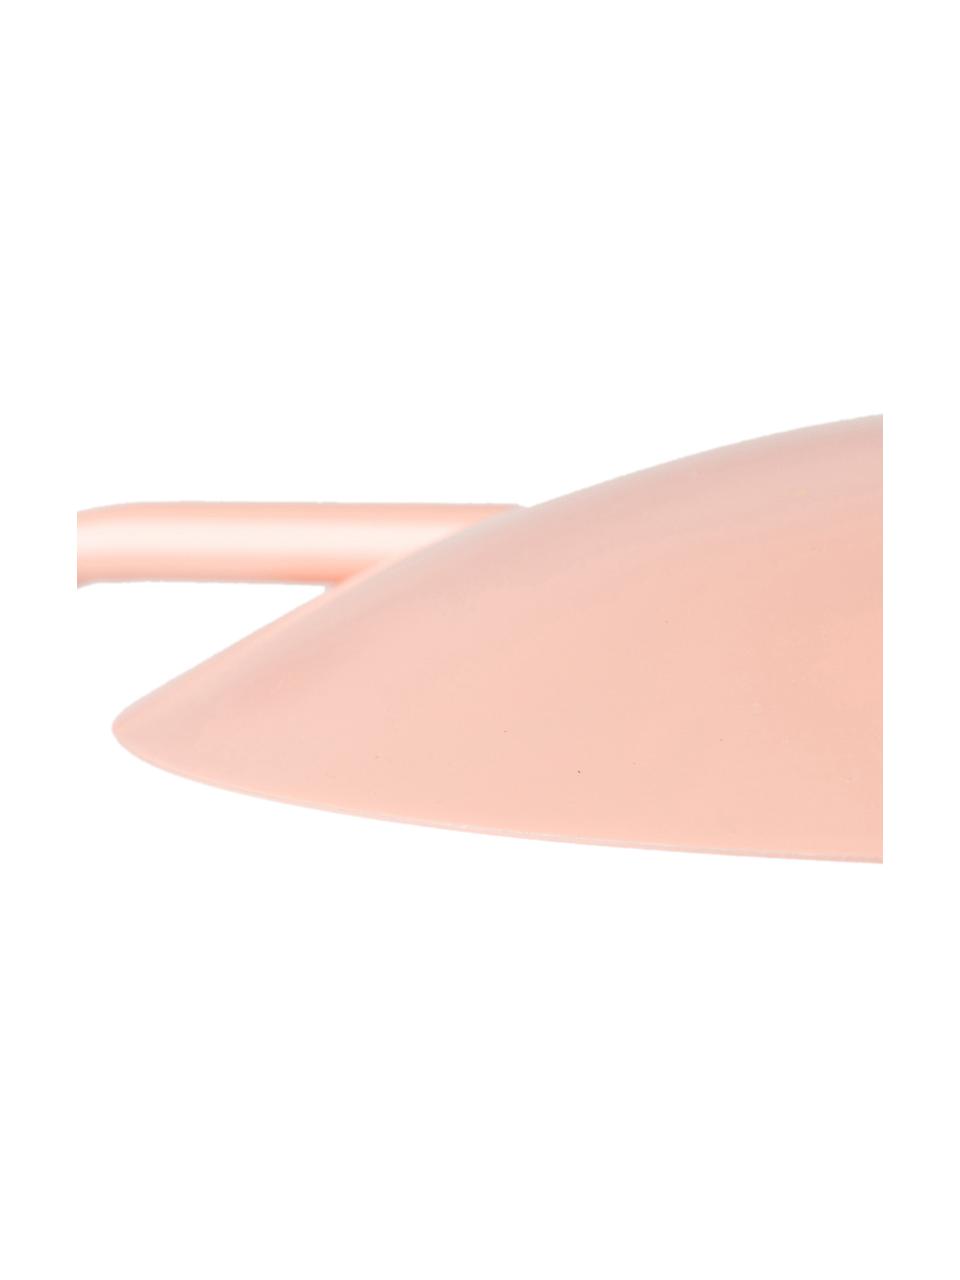 Tischlampe Pixie in Rosa, Lampenschirm: Metall, pulverbeschichtet, Lampenfuß: Metall, pulverbeschichtet, Rosa, B 25 x H 39 cm